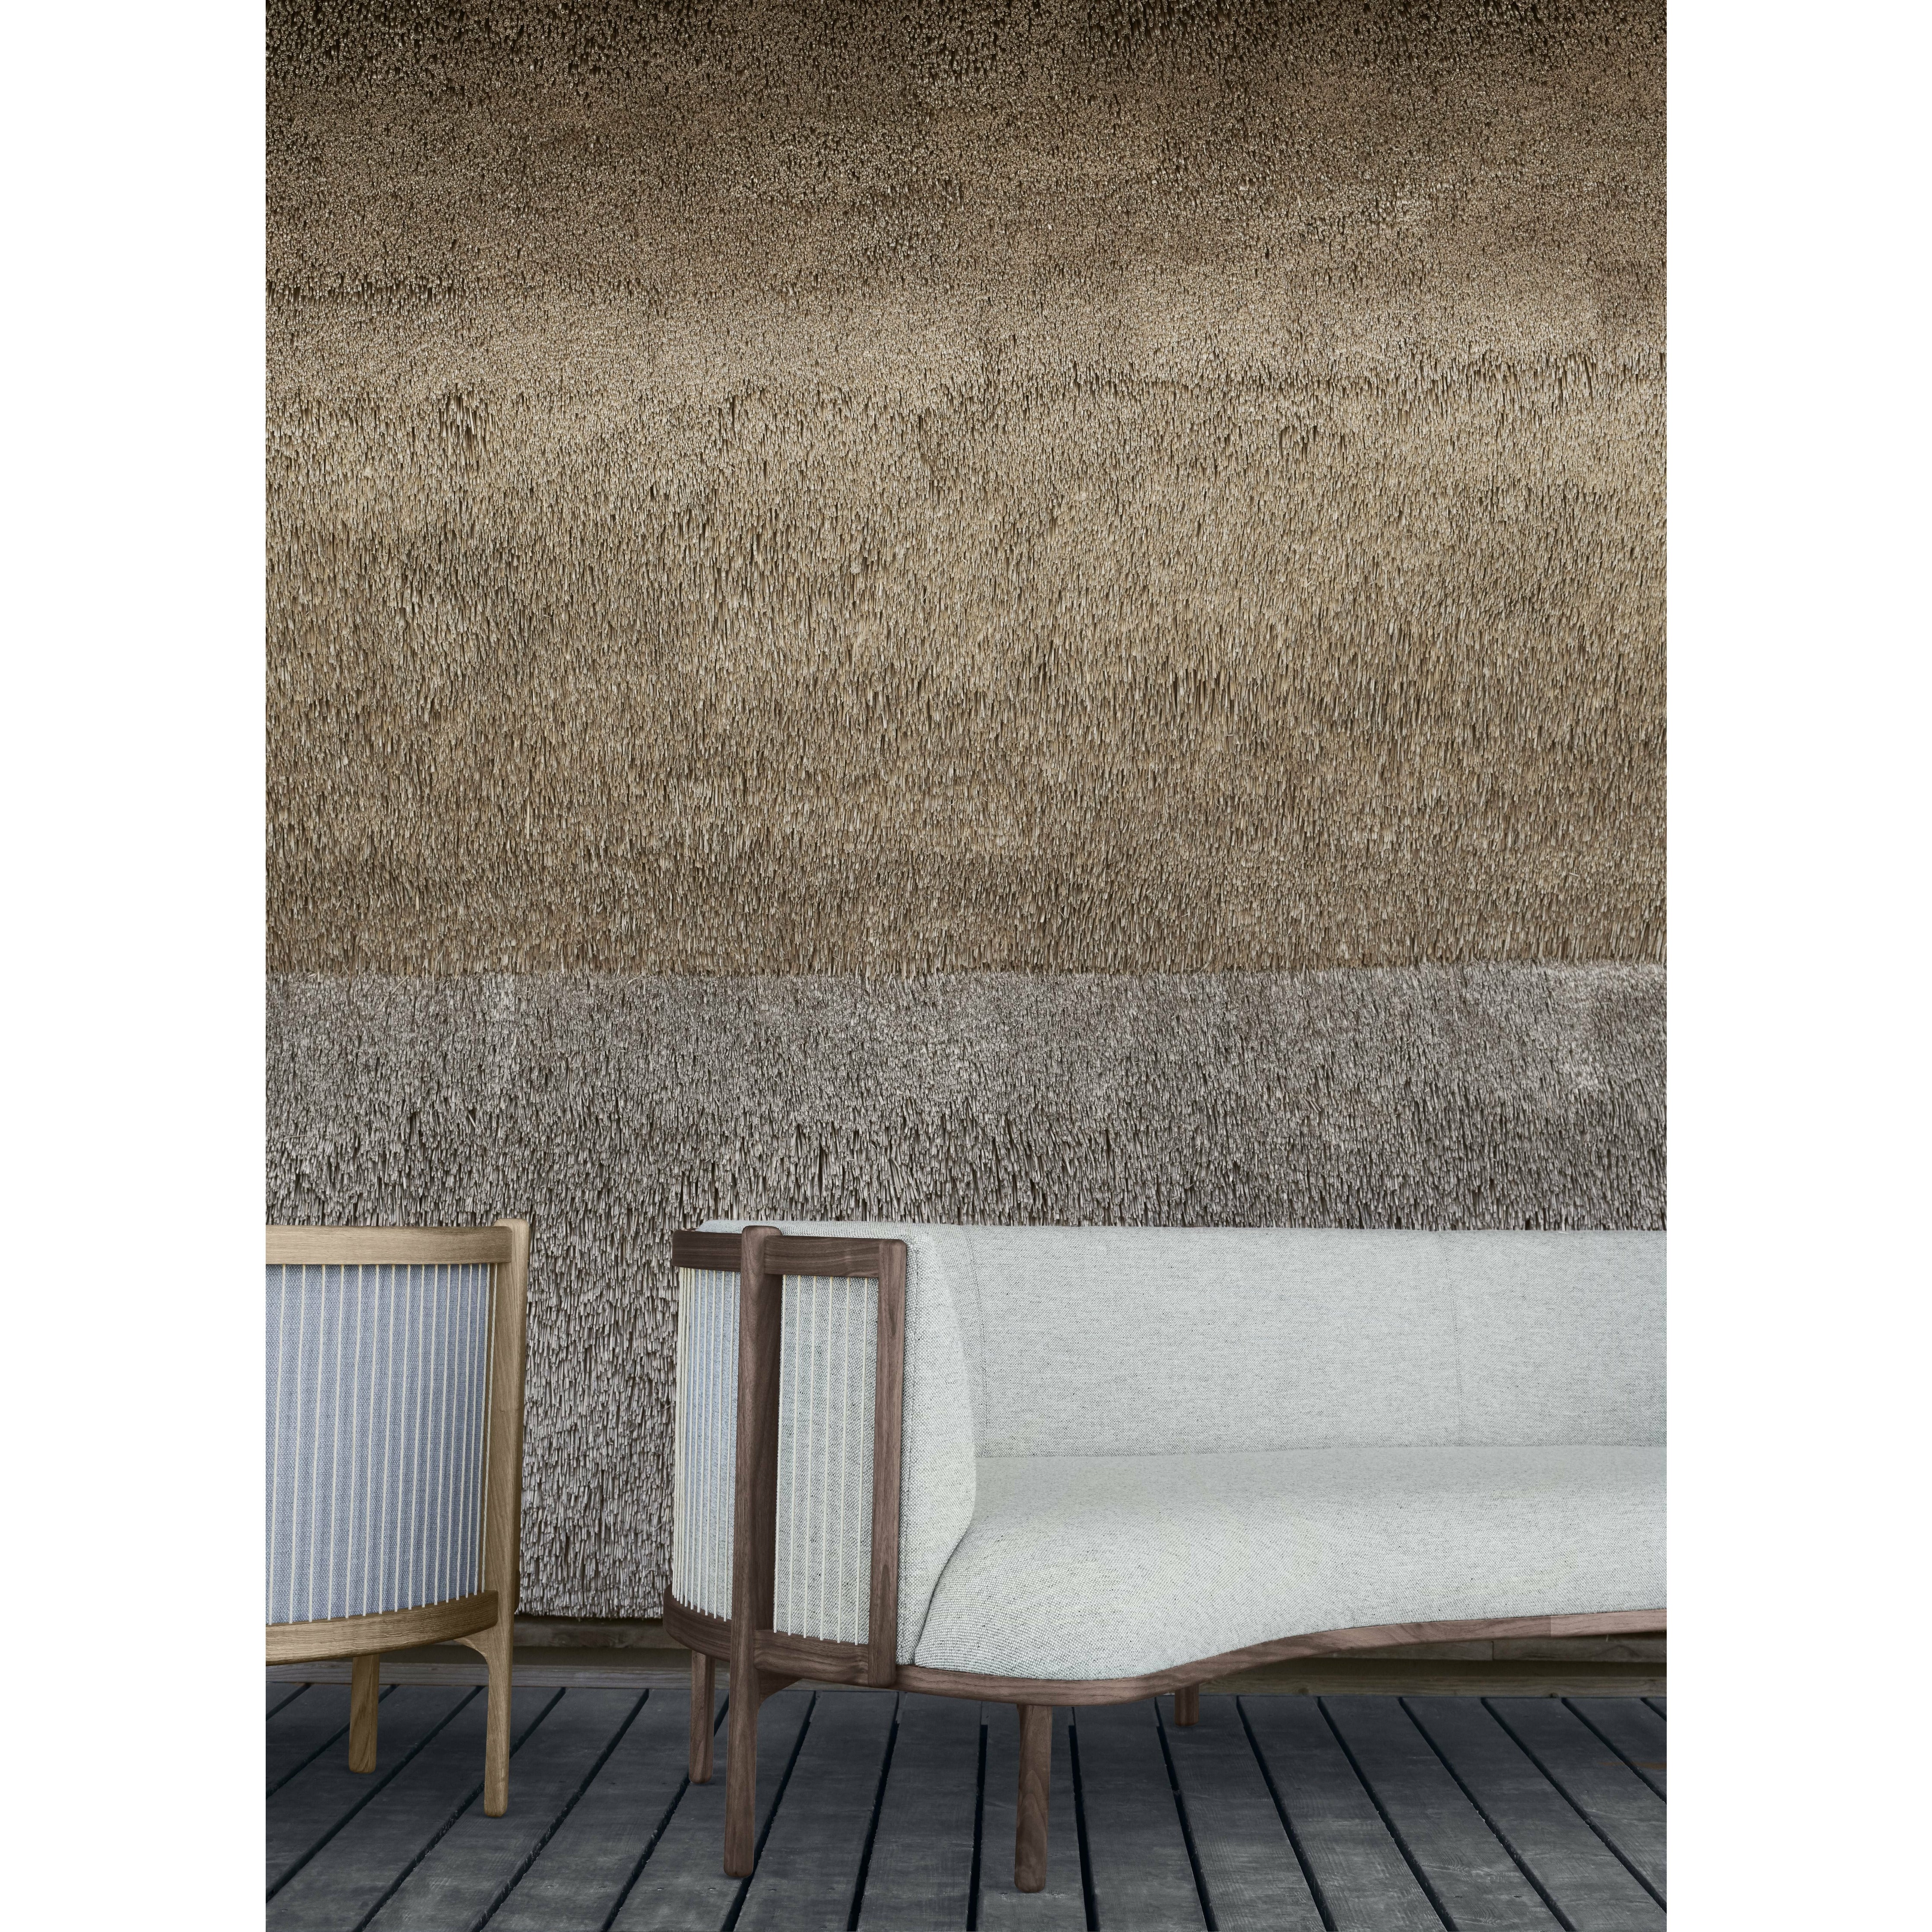 Carl Hansen Rf1903 L Sideways Sofa 3 Sitzer Left Oak Oil/Fiord Fabric, Grau/Naturbraun